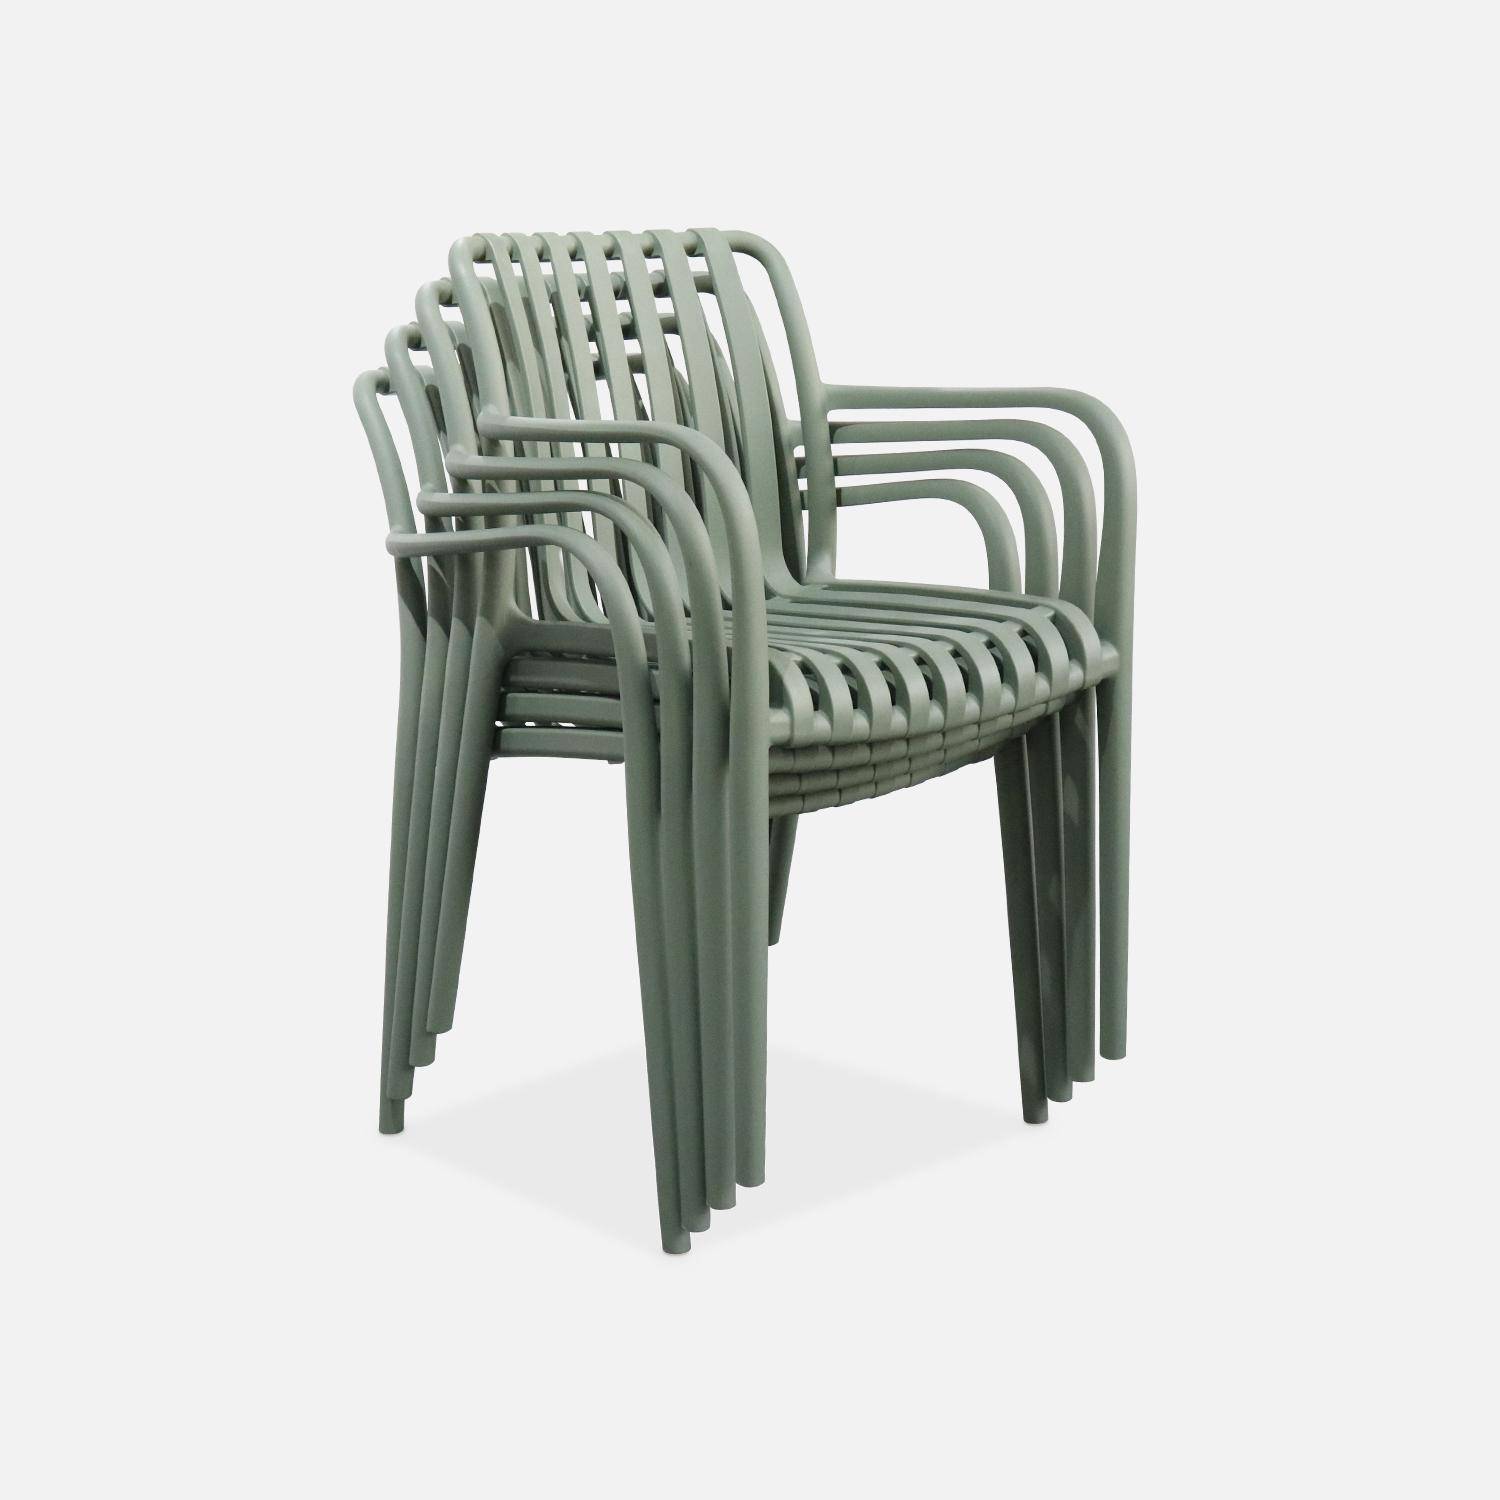 4er Set Gartensessel aus graugrünem Kunststoff, stapelbar, lineares Design - Agathe,sweeek,Photo3